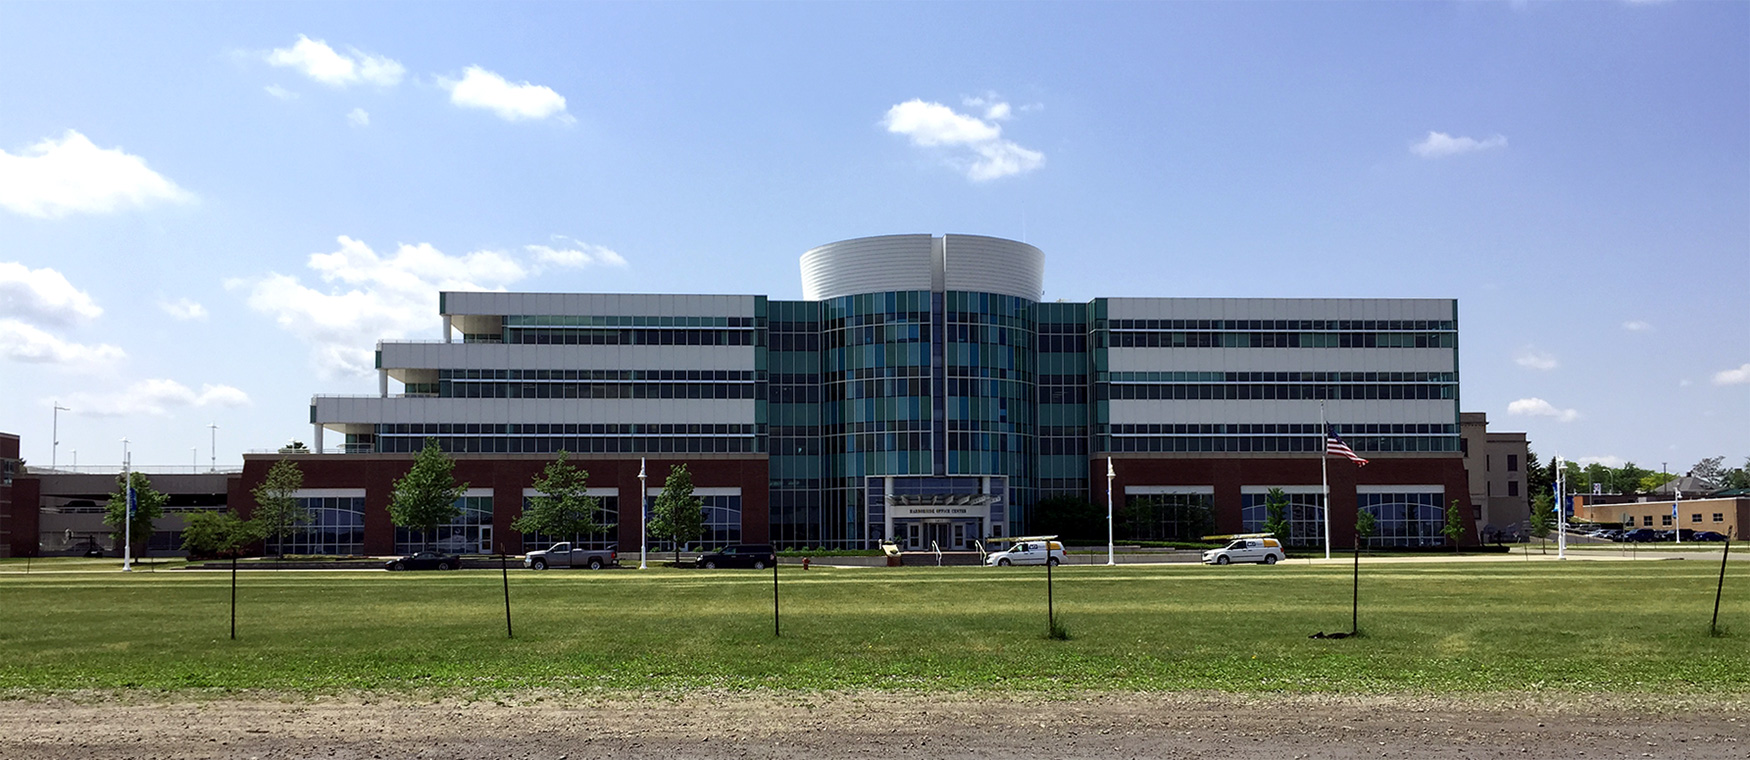 Port Huron Law Firm Building